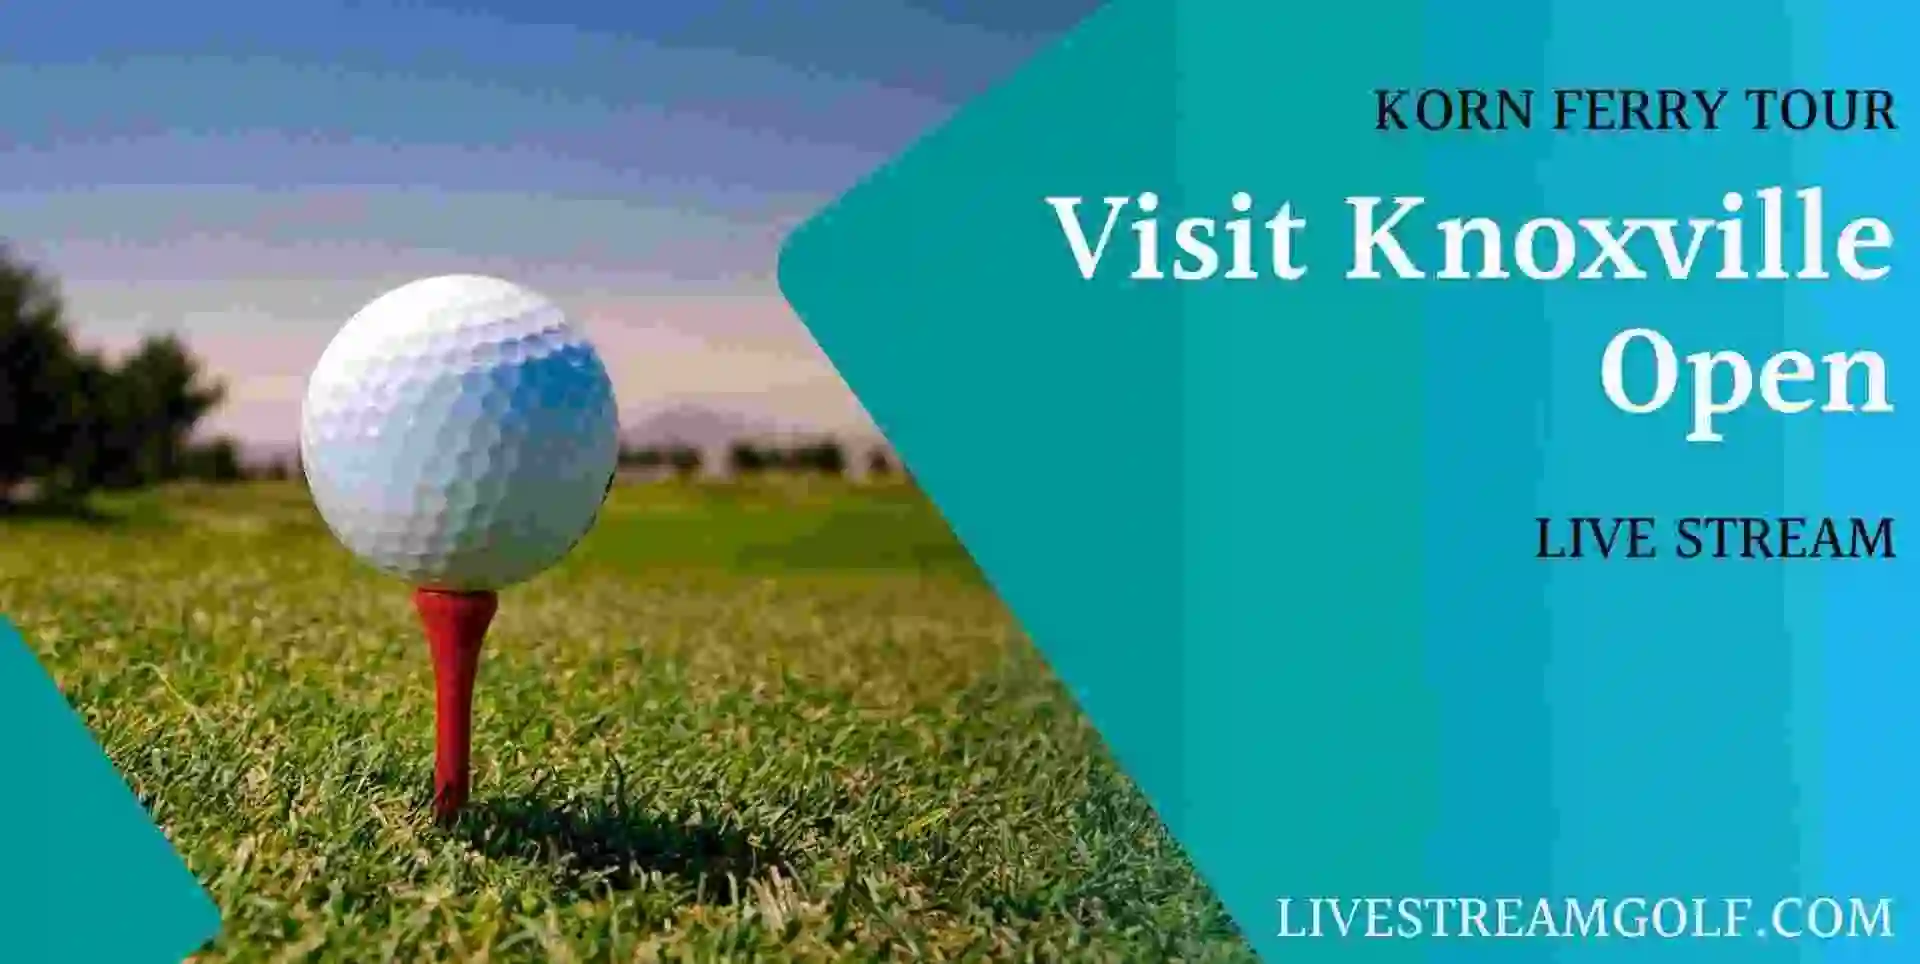 Visit Knoxville Open Live Stream Golf Korn Ferry